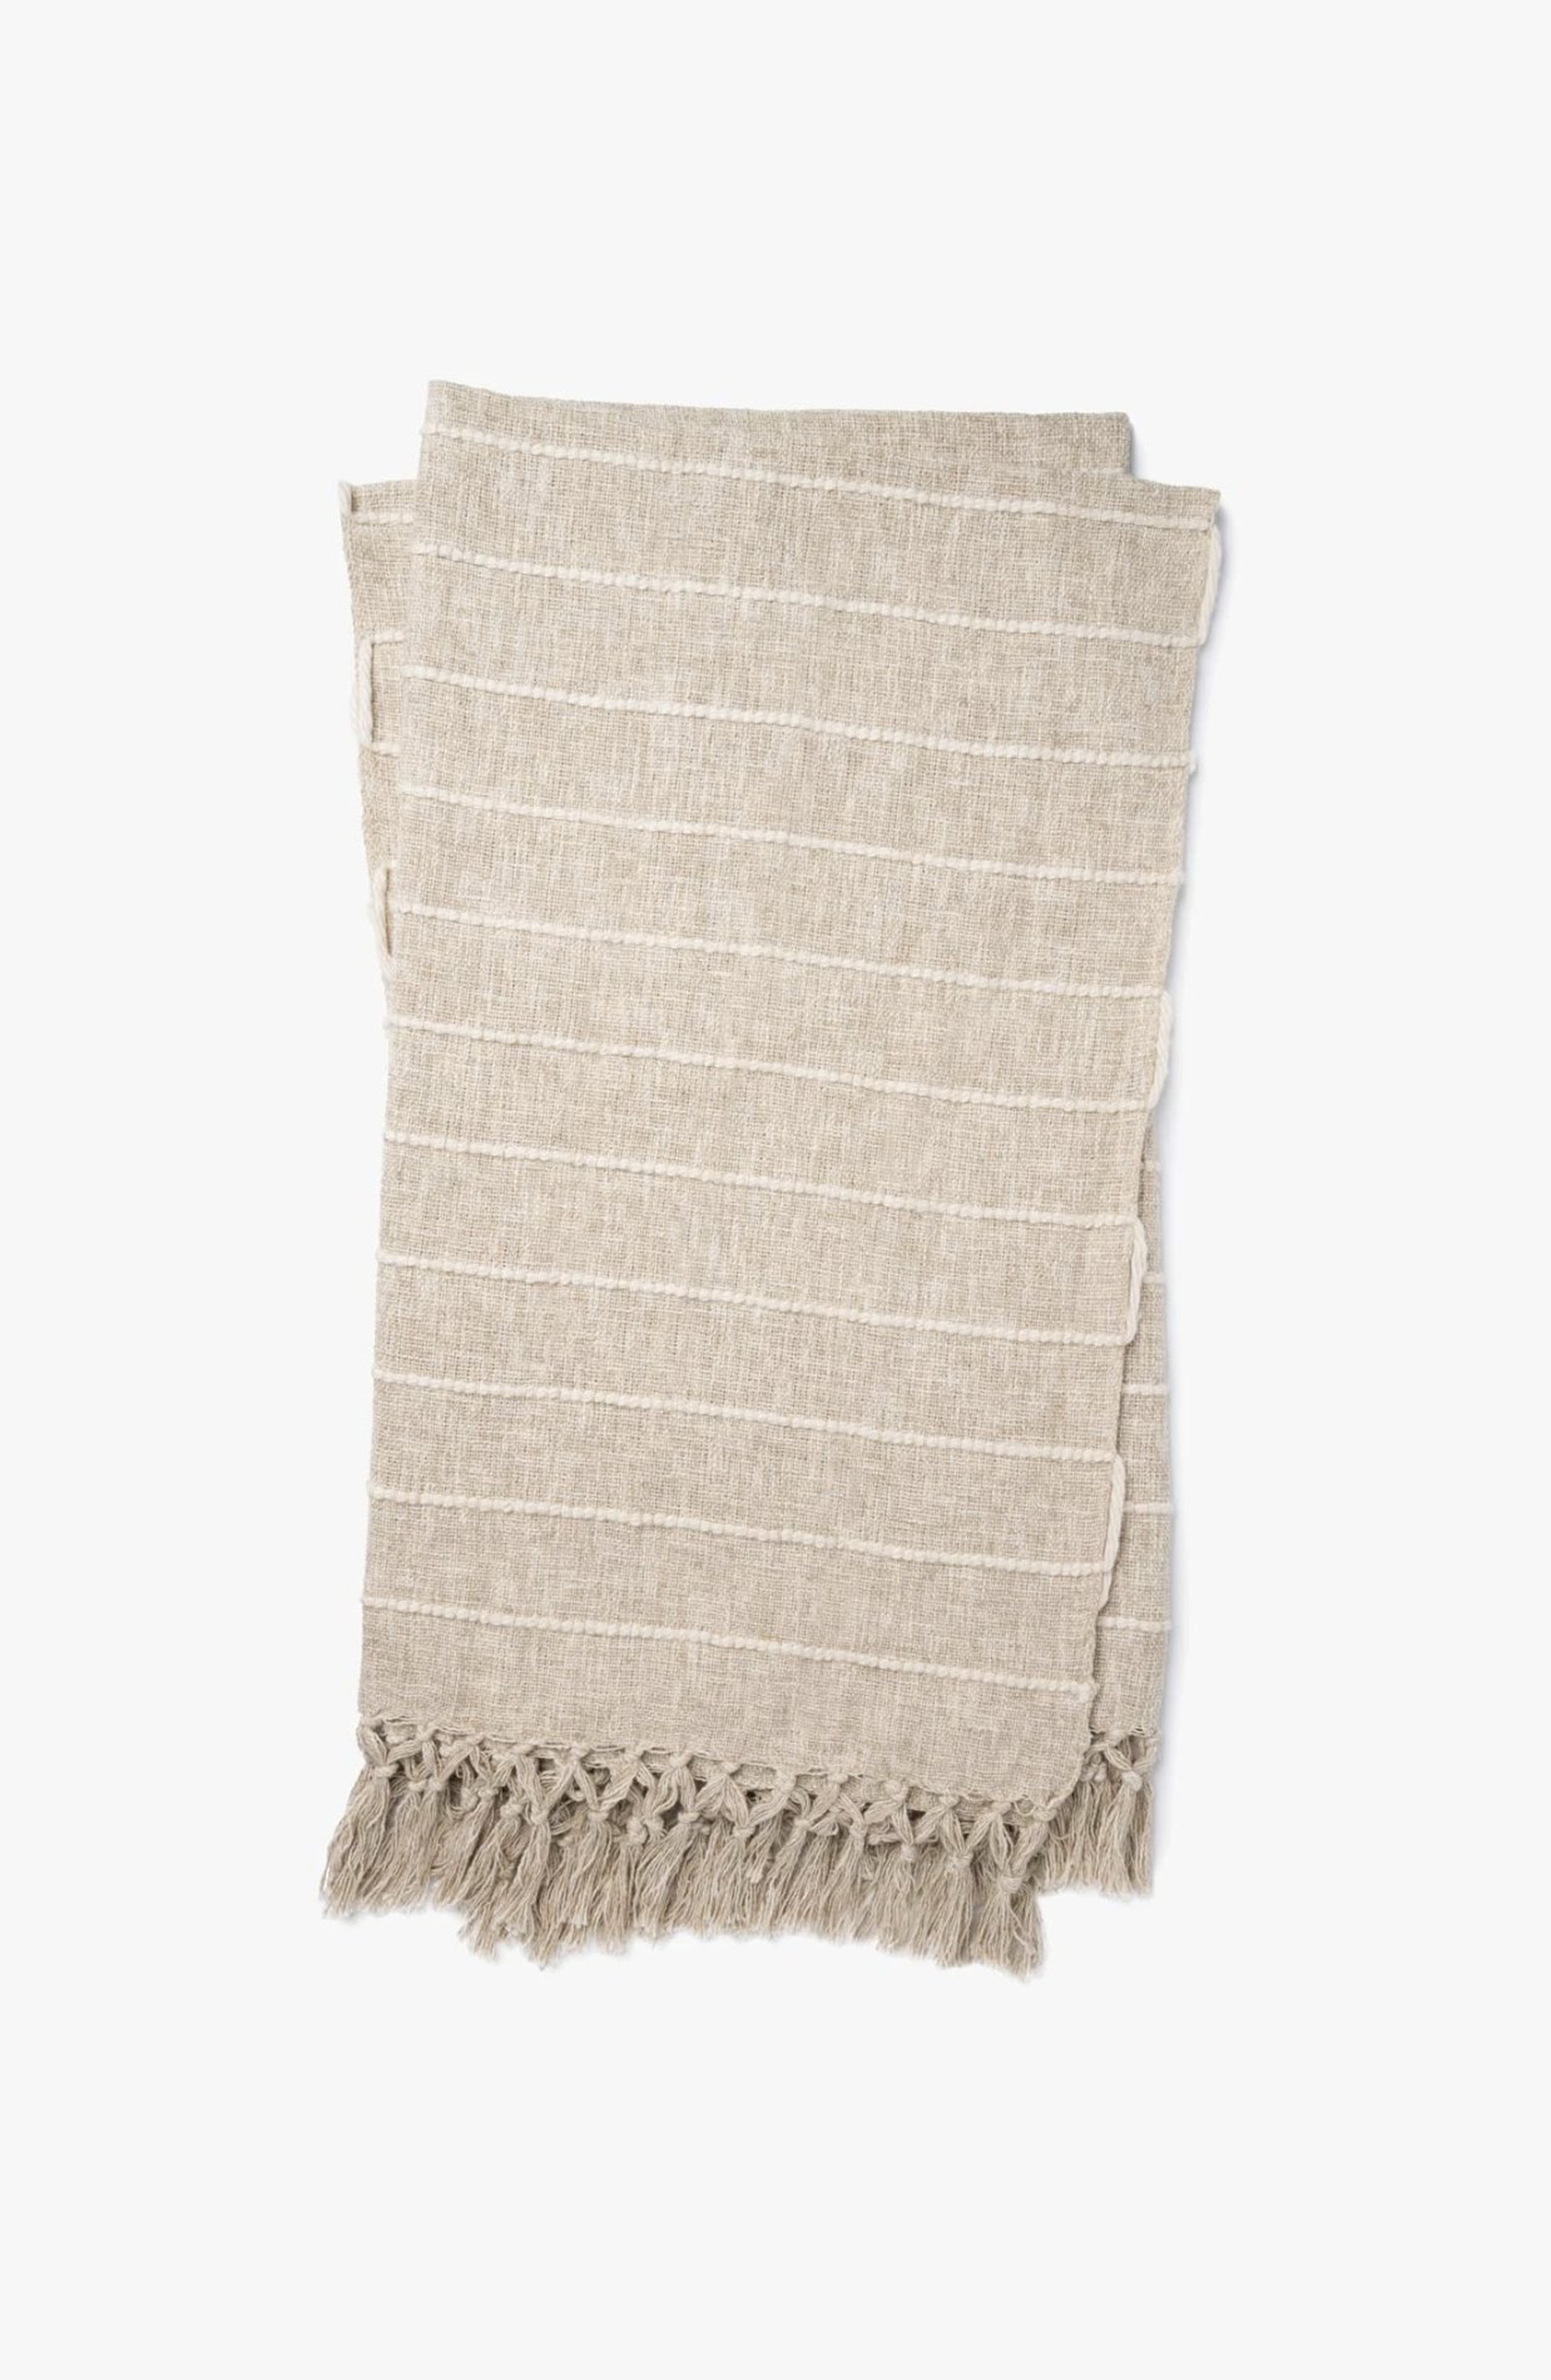 Striped Throw Blanket, Tan & Ivory - Loma Threads